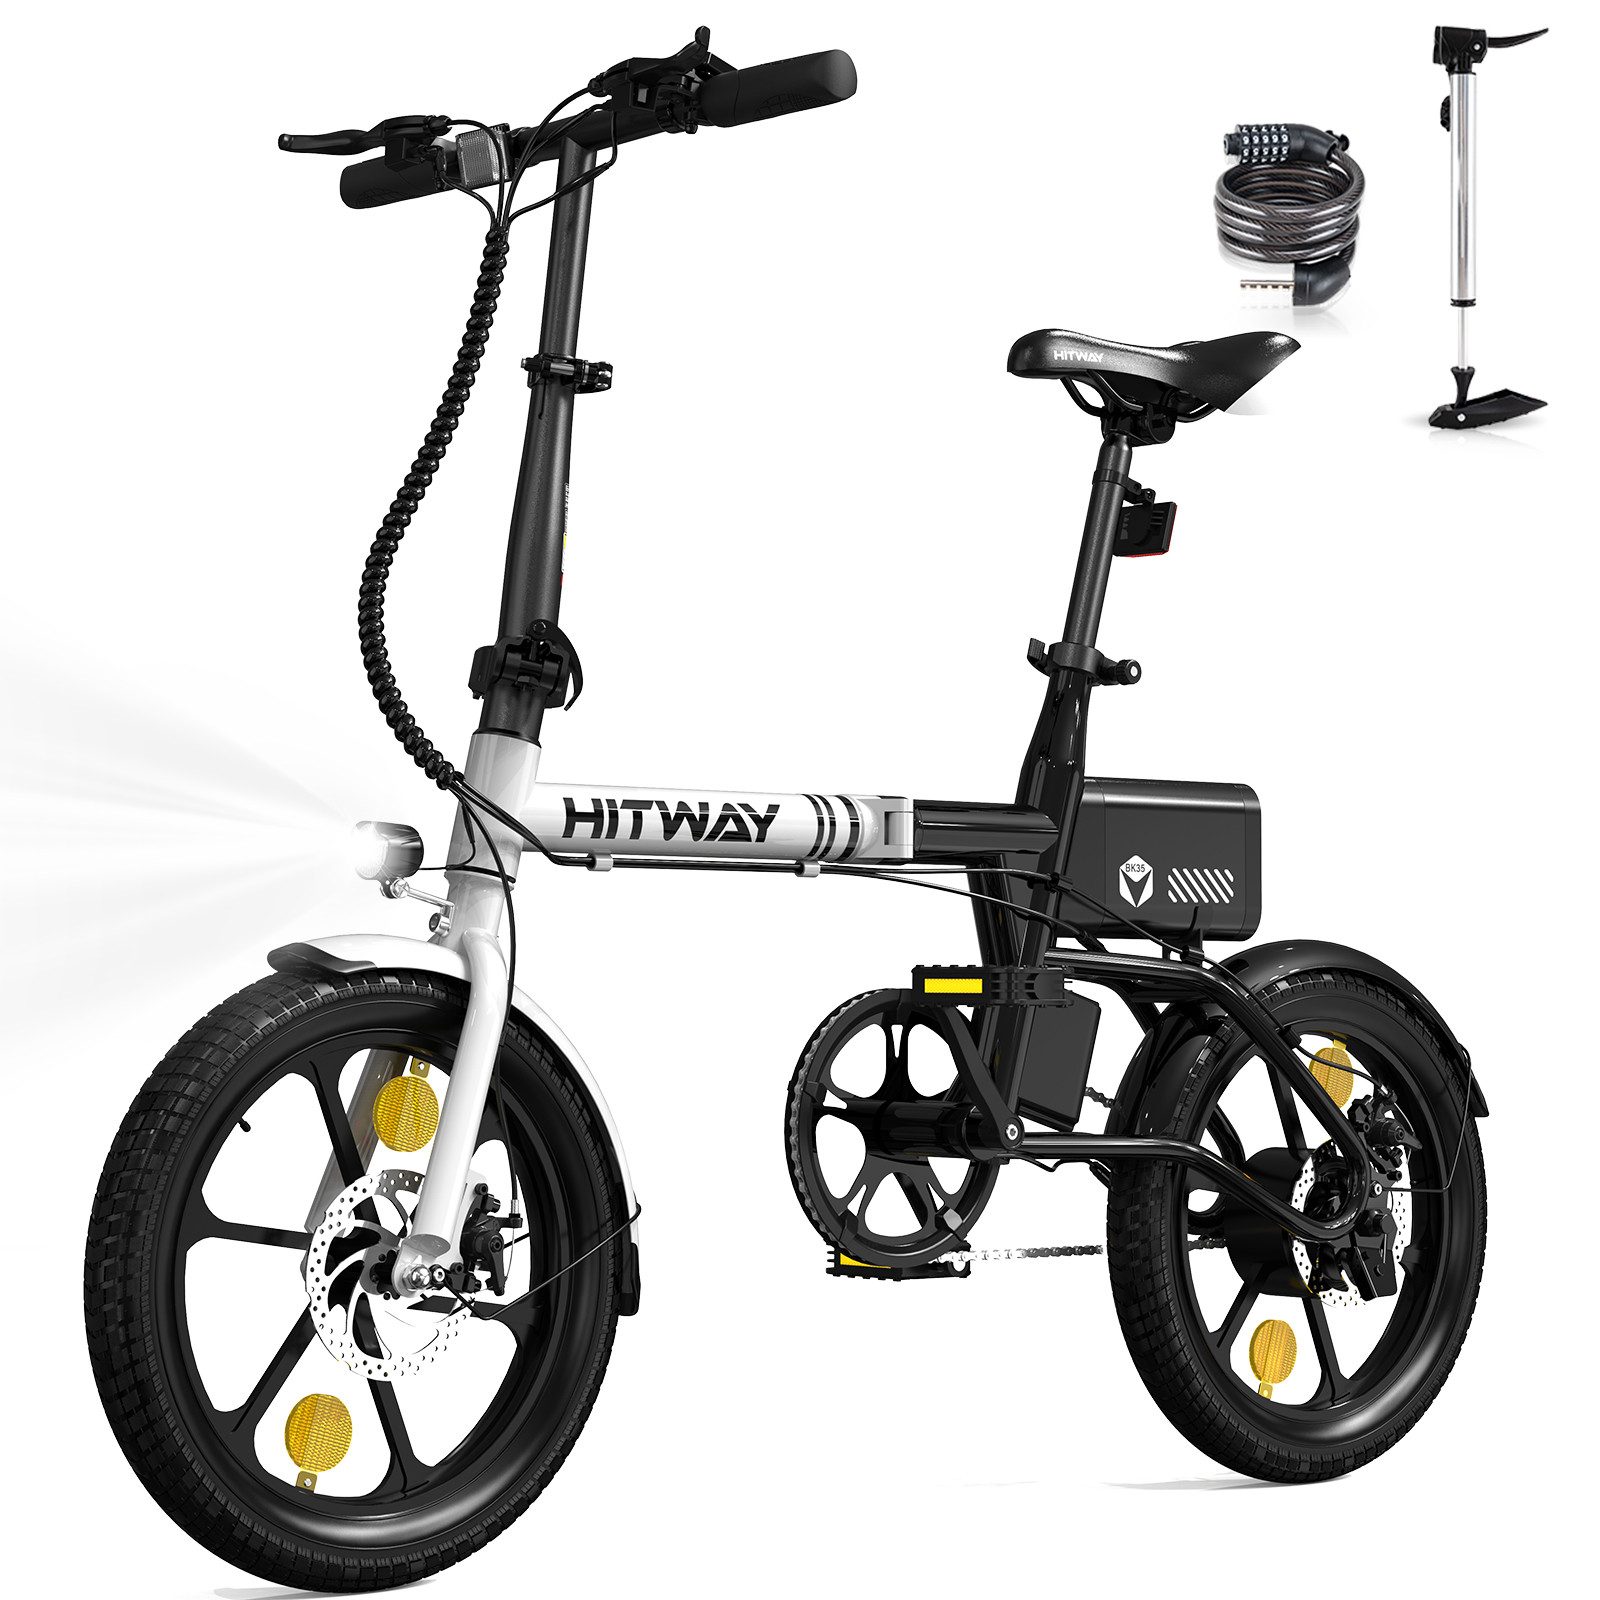 HITWAY E-Bike Elektrofahrrad Klapprad, 16-Zoll 36 V/6Ah für Damen Herren, Heckmotor, 216 Wh Akku, Klappbares Fahrrad und nur 14,5 kg, für Damen und Herren 155 - 180 cm